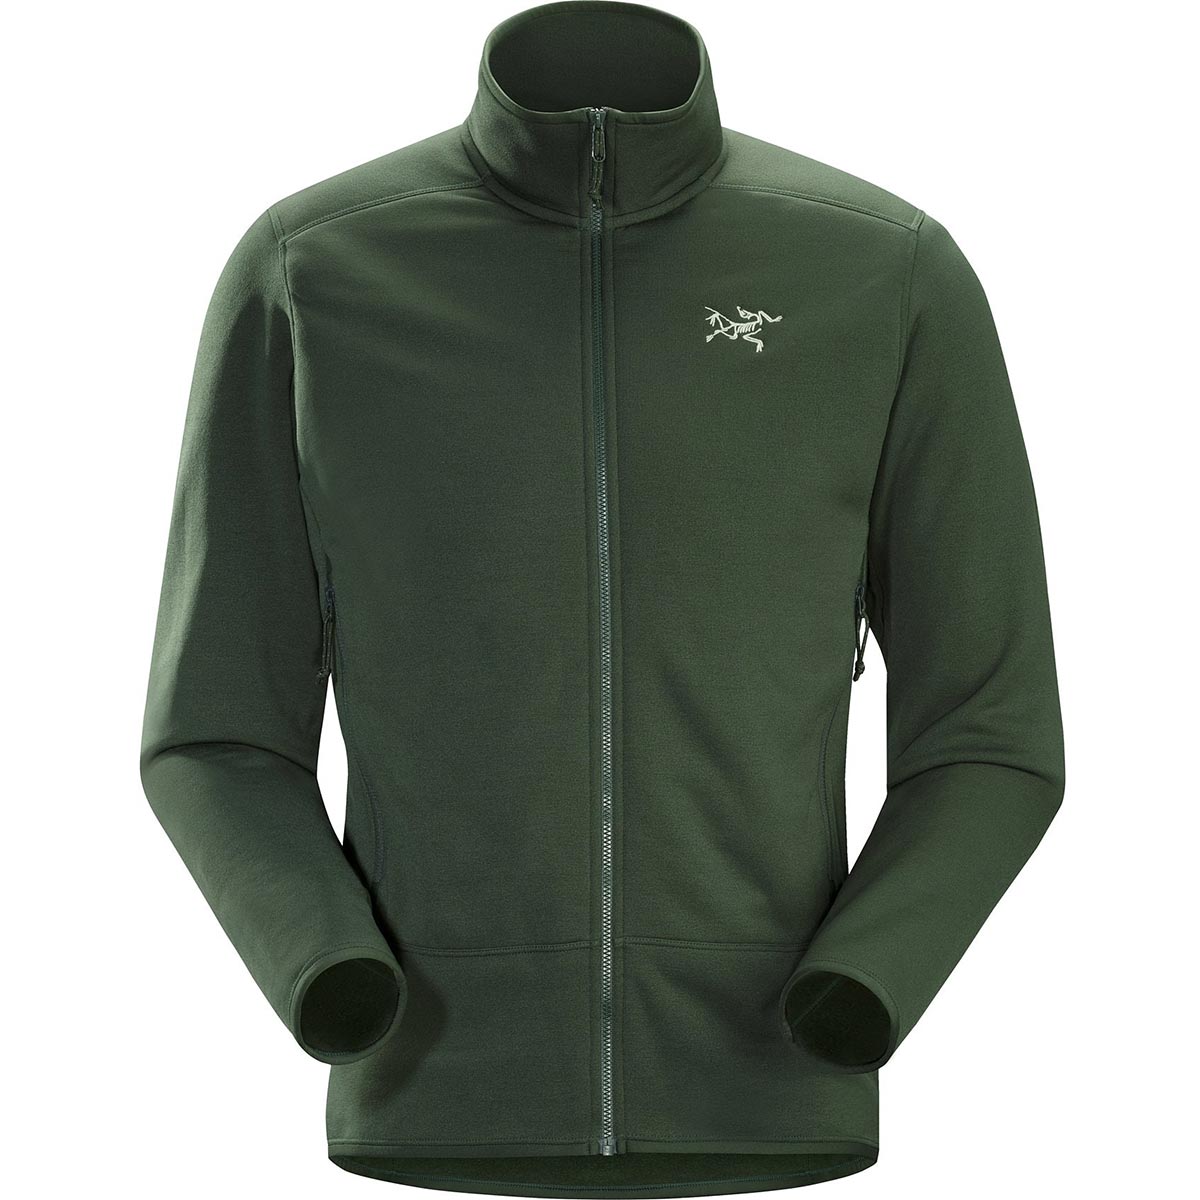 Arc'teryx Kyanite Jacket, men's, discontinued Spring 2019 colors (free ...